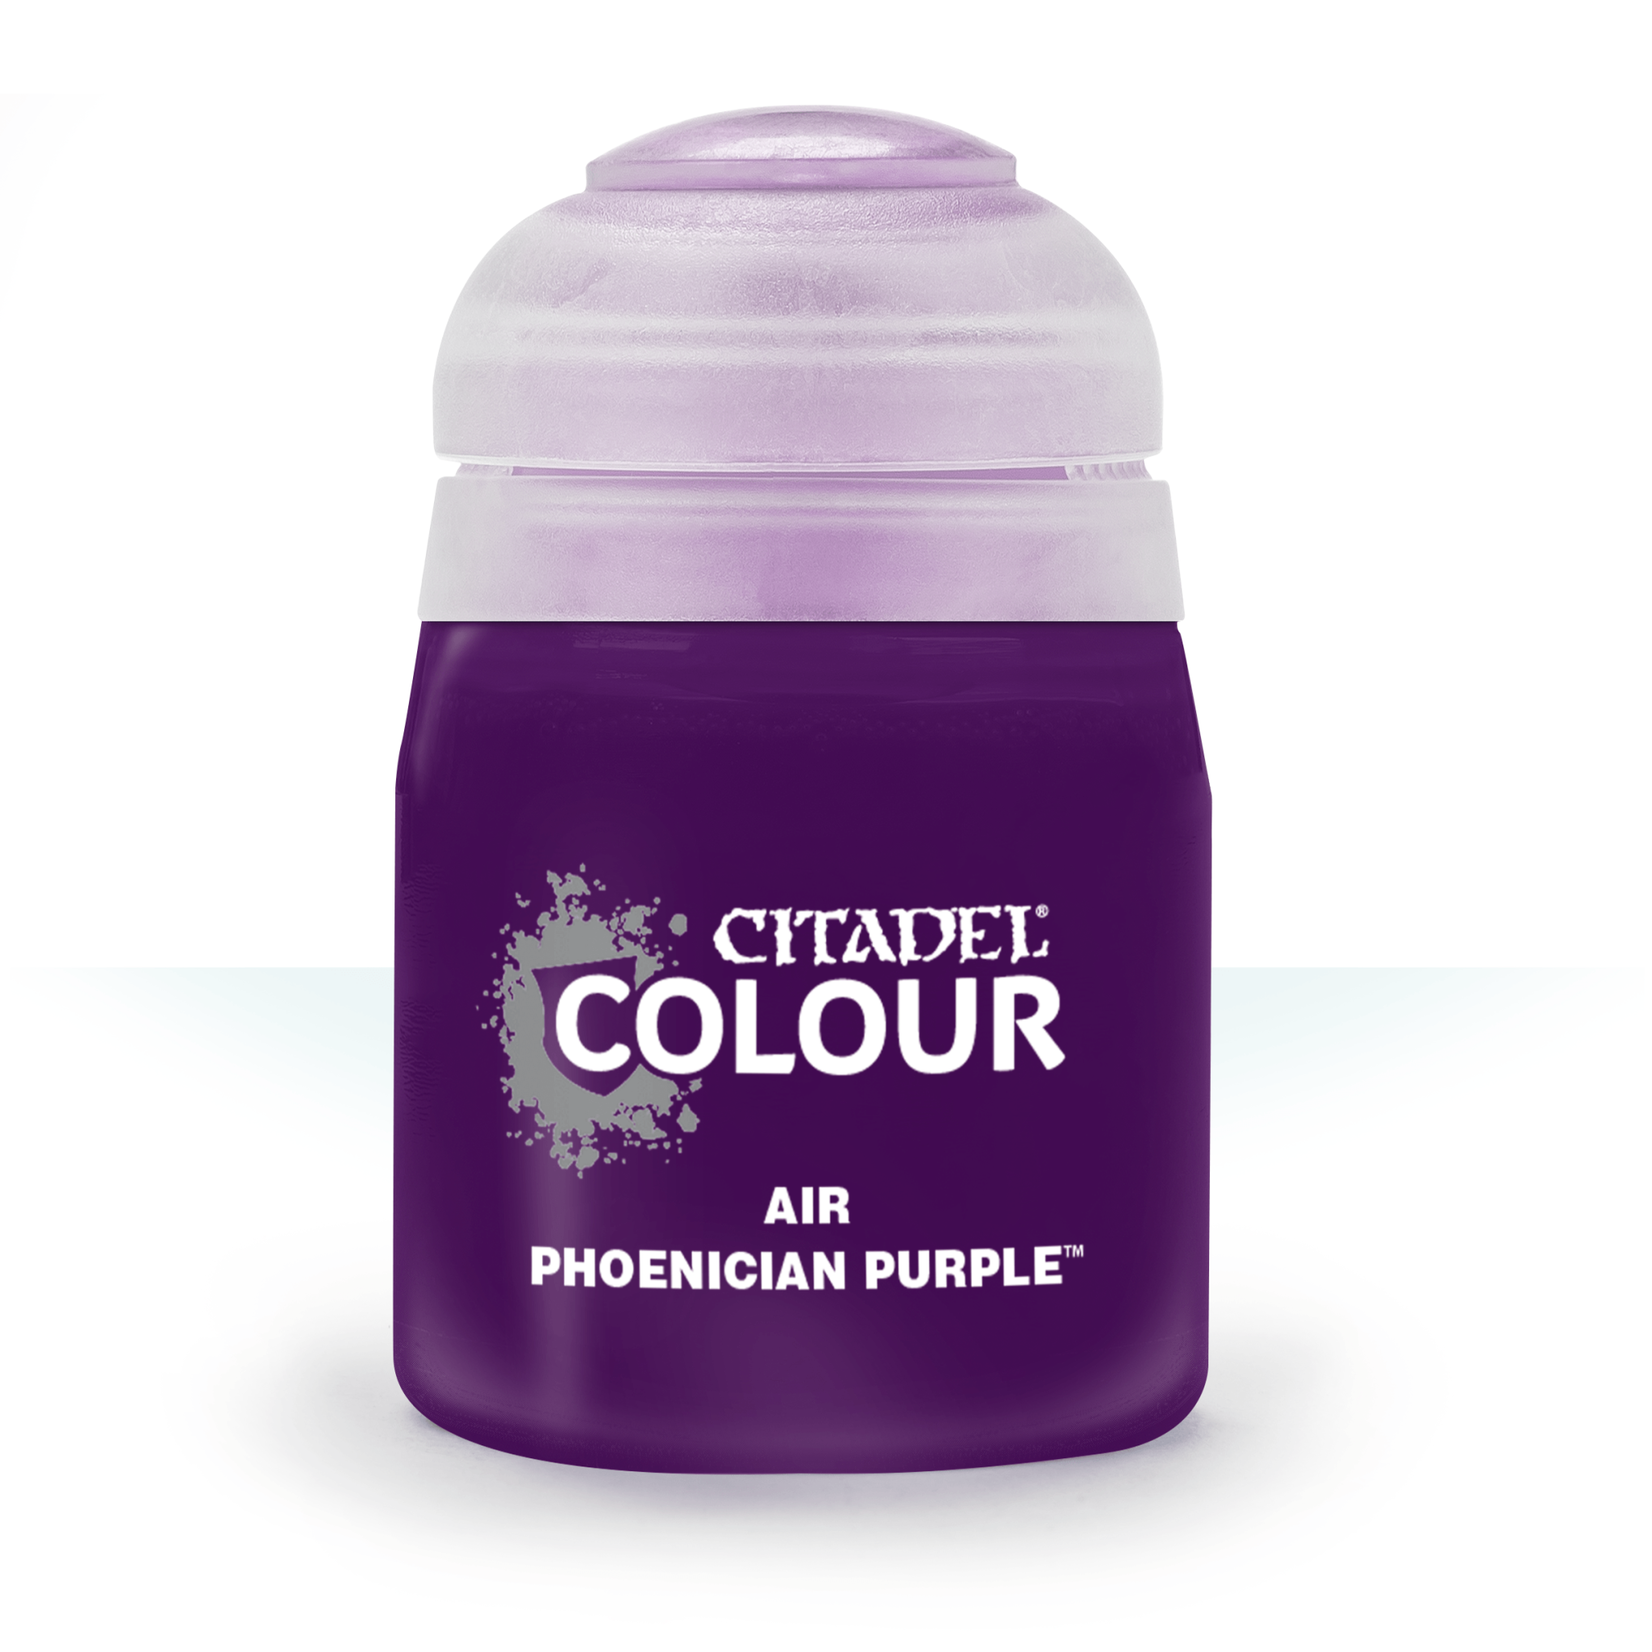 Citadel Air Phoenician Purple 24ml pot Air